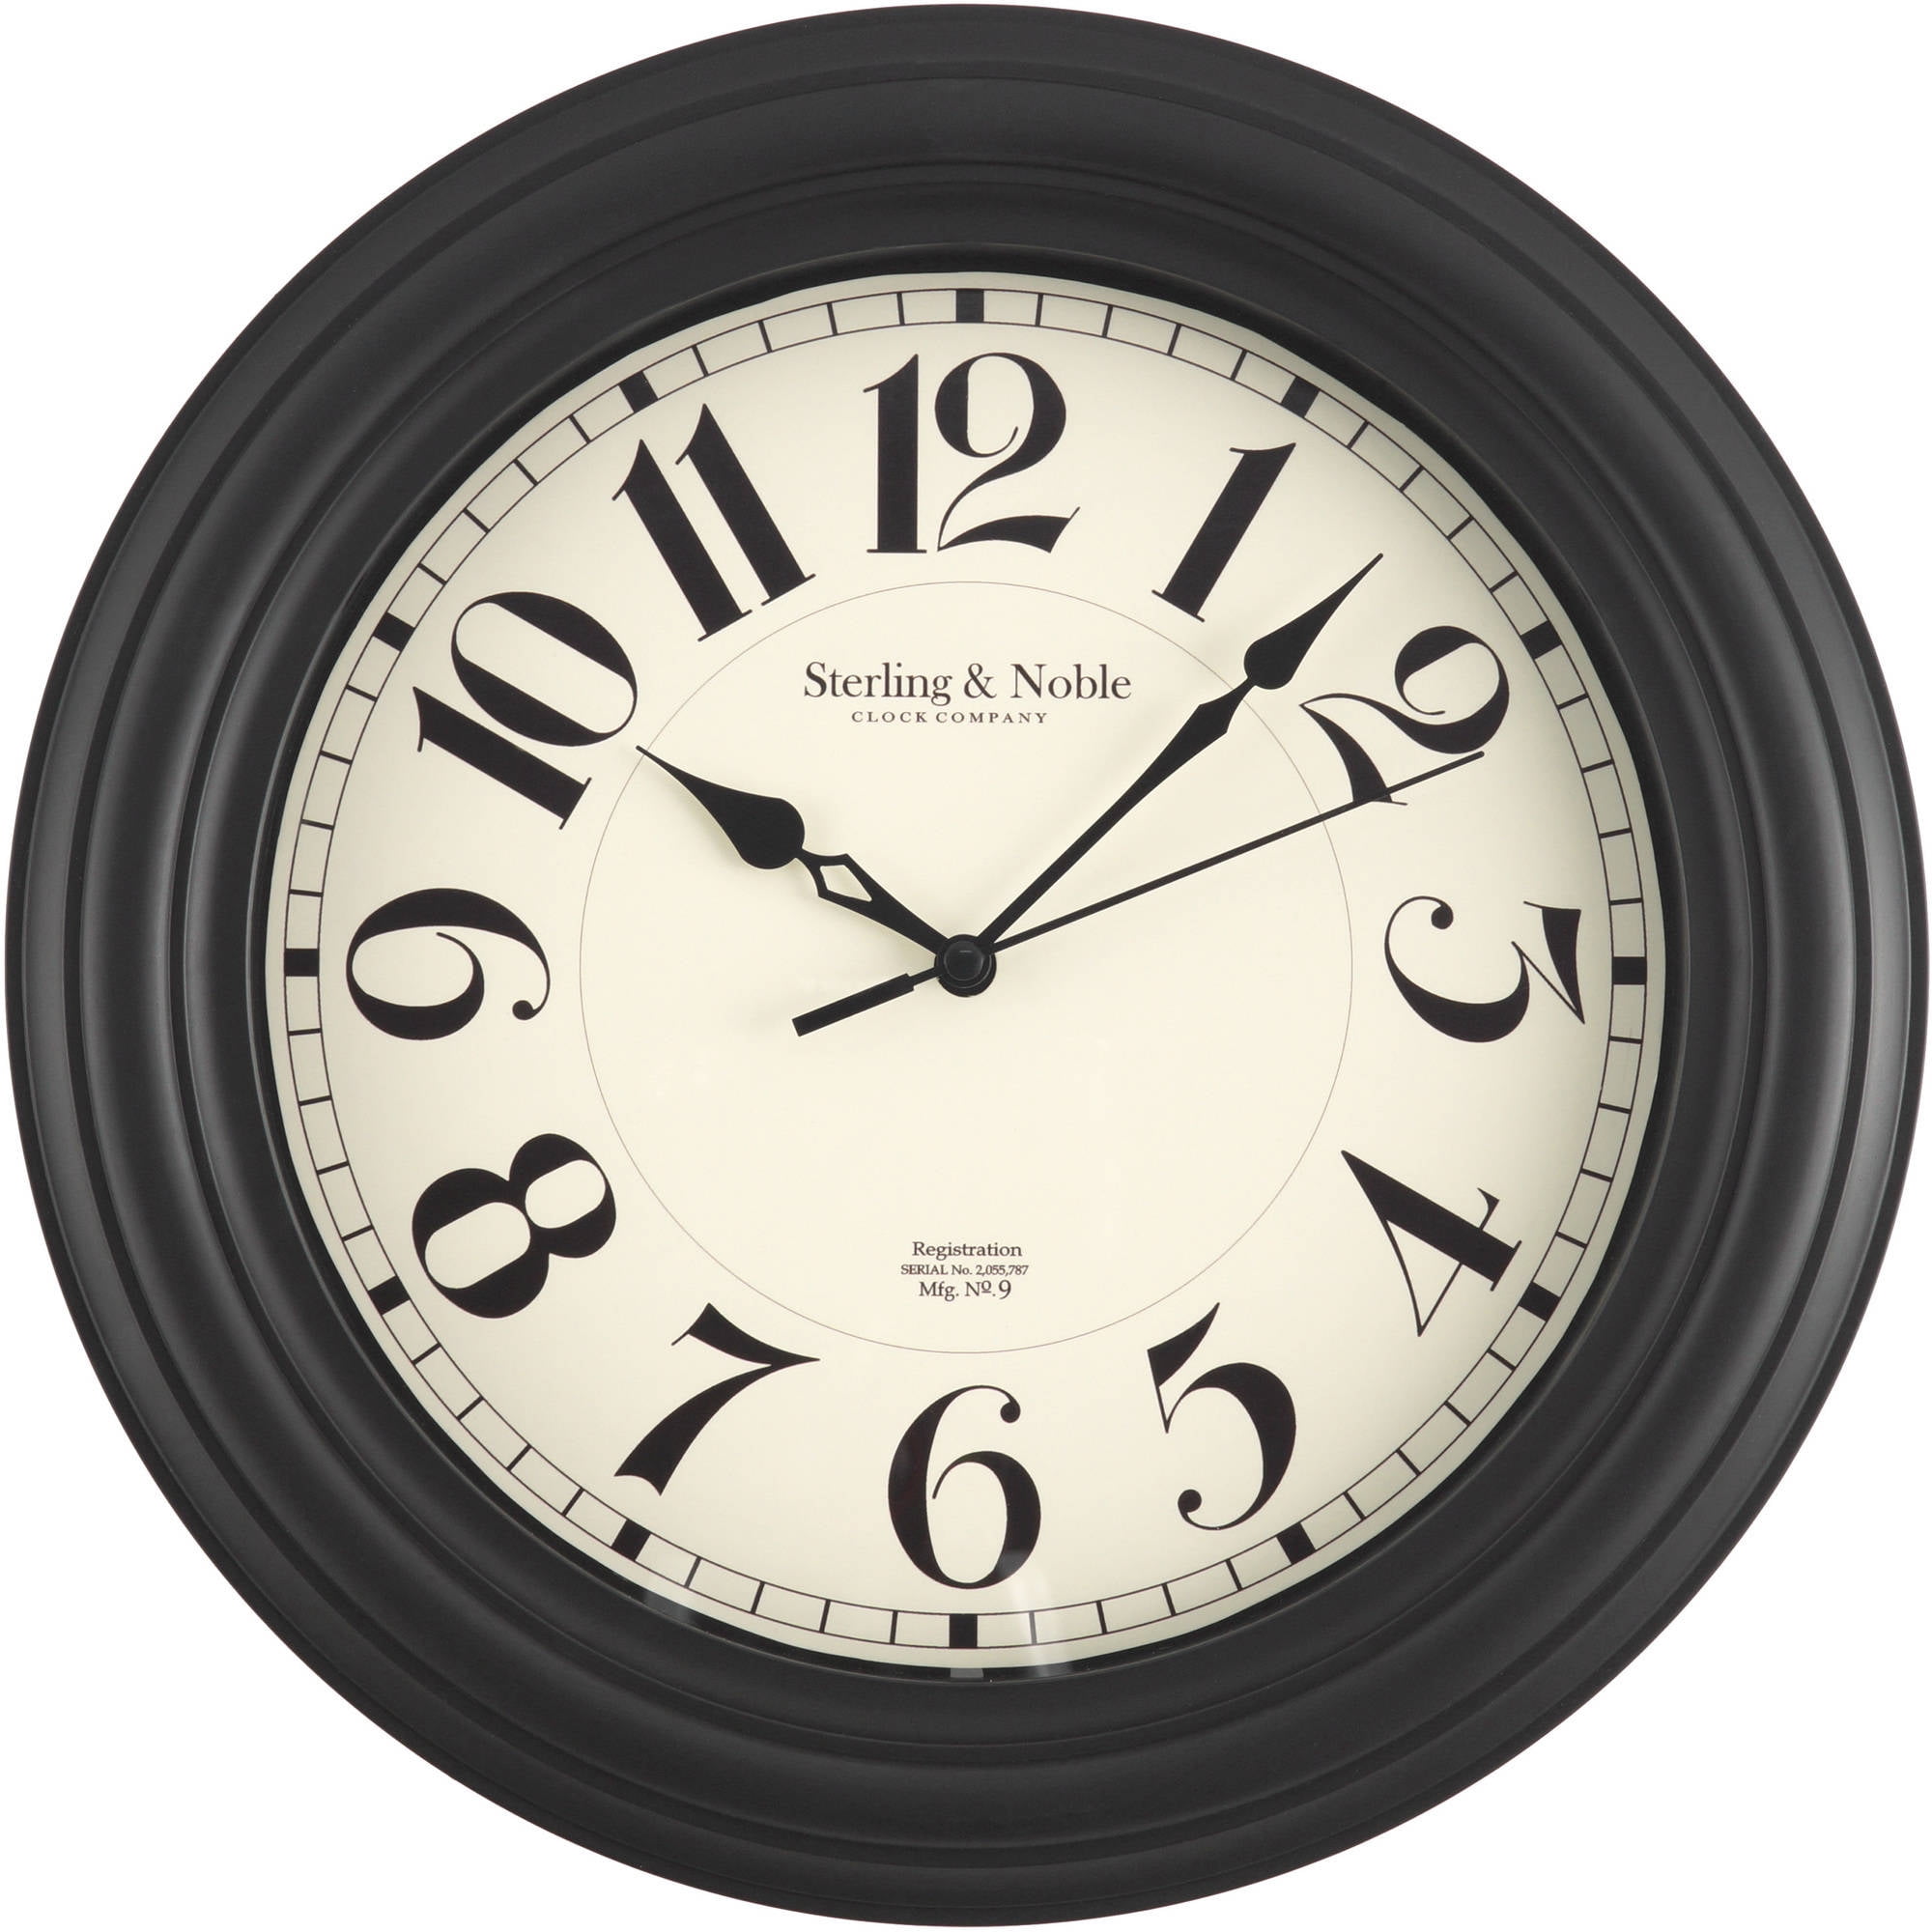 NEW Westclox 15.5" Farmhouse Wall Clock Model 38070 **FREE SHIPPING** 